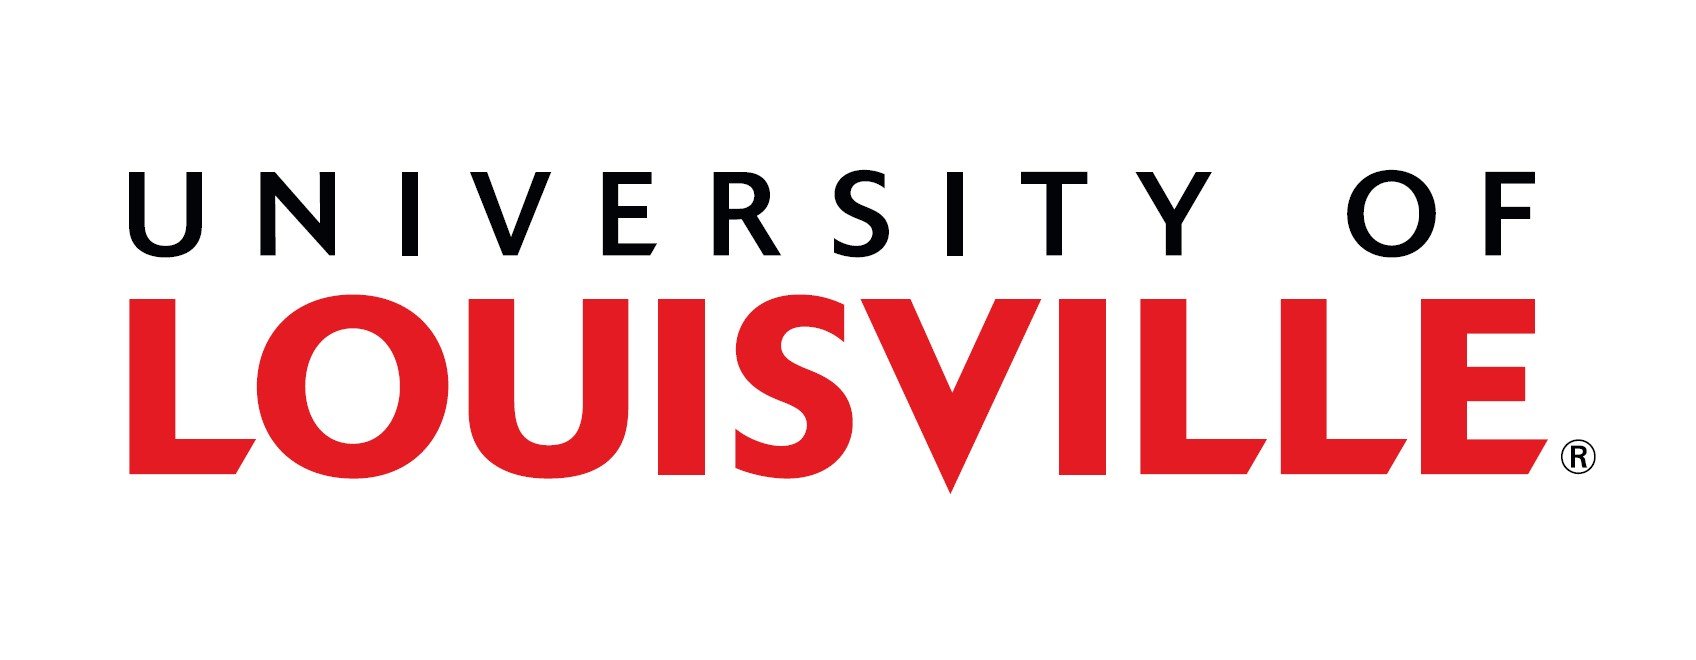 Louisville logo rectangle.jpg